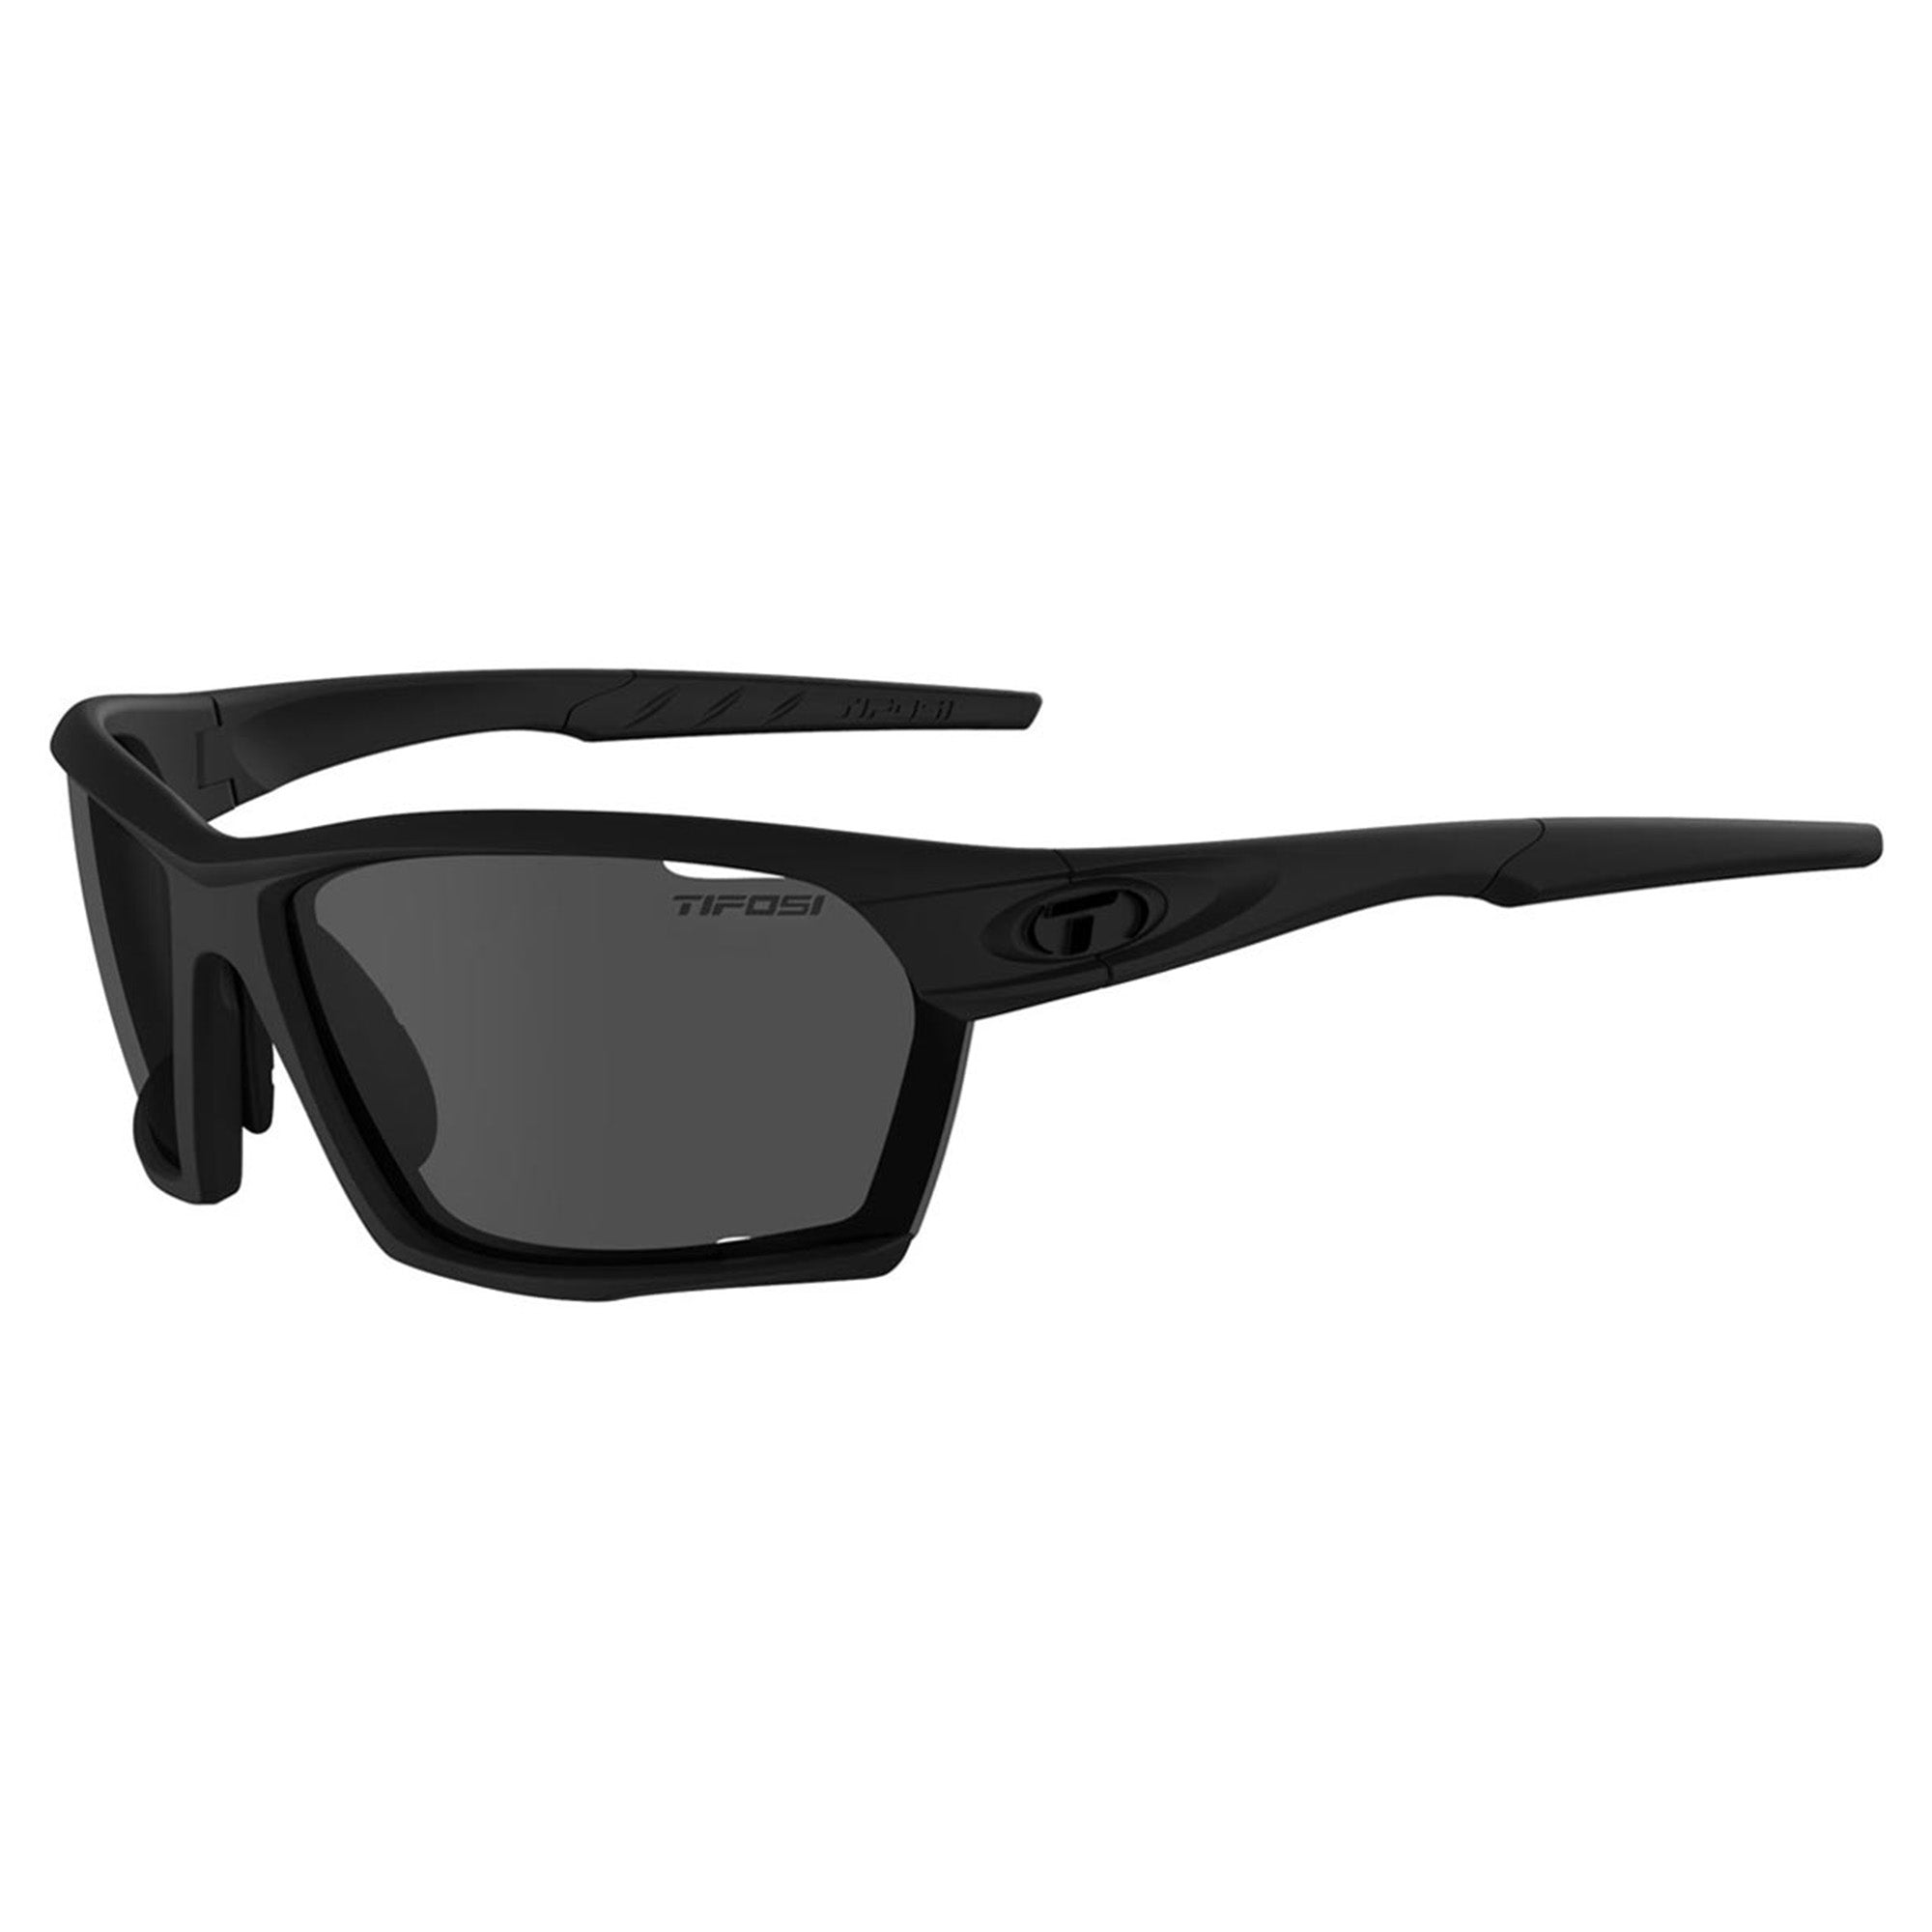 Tifosi Kilo Interchangeable Lens Sunglasses